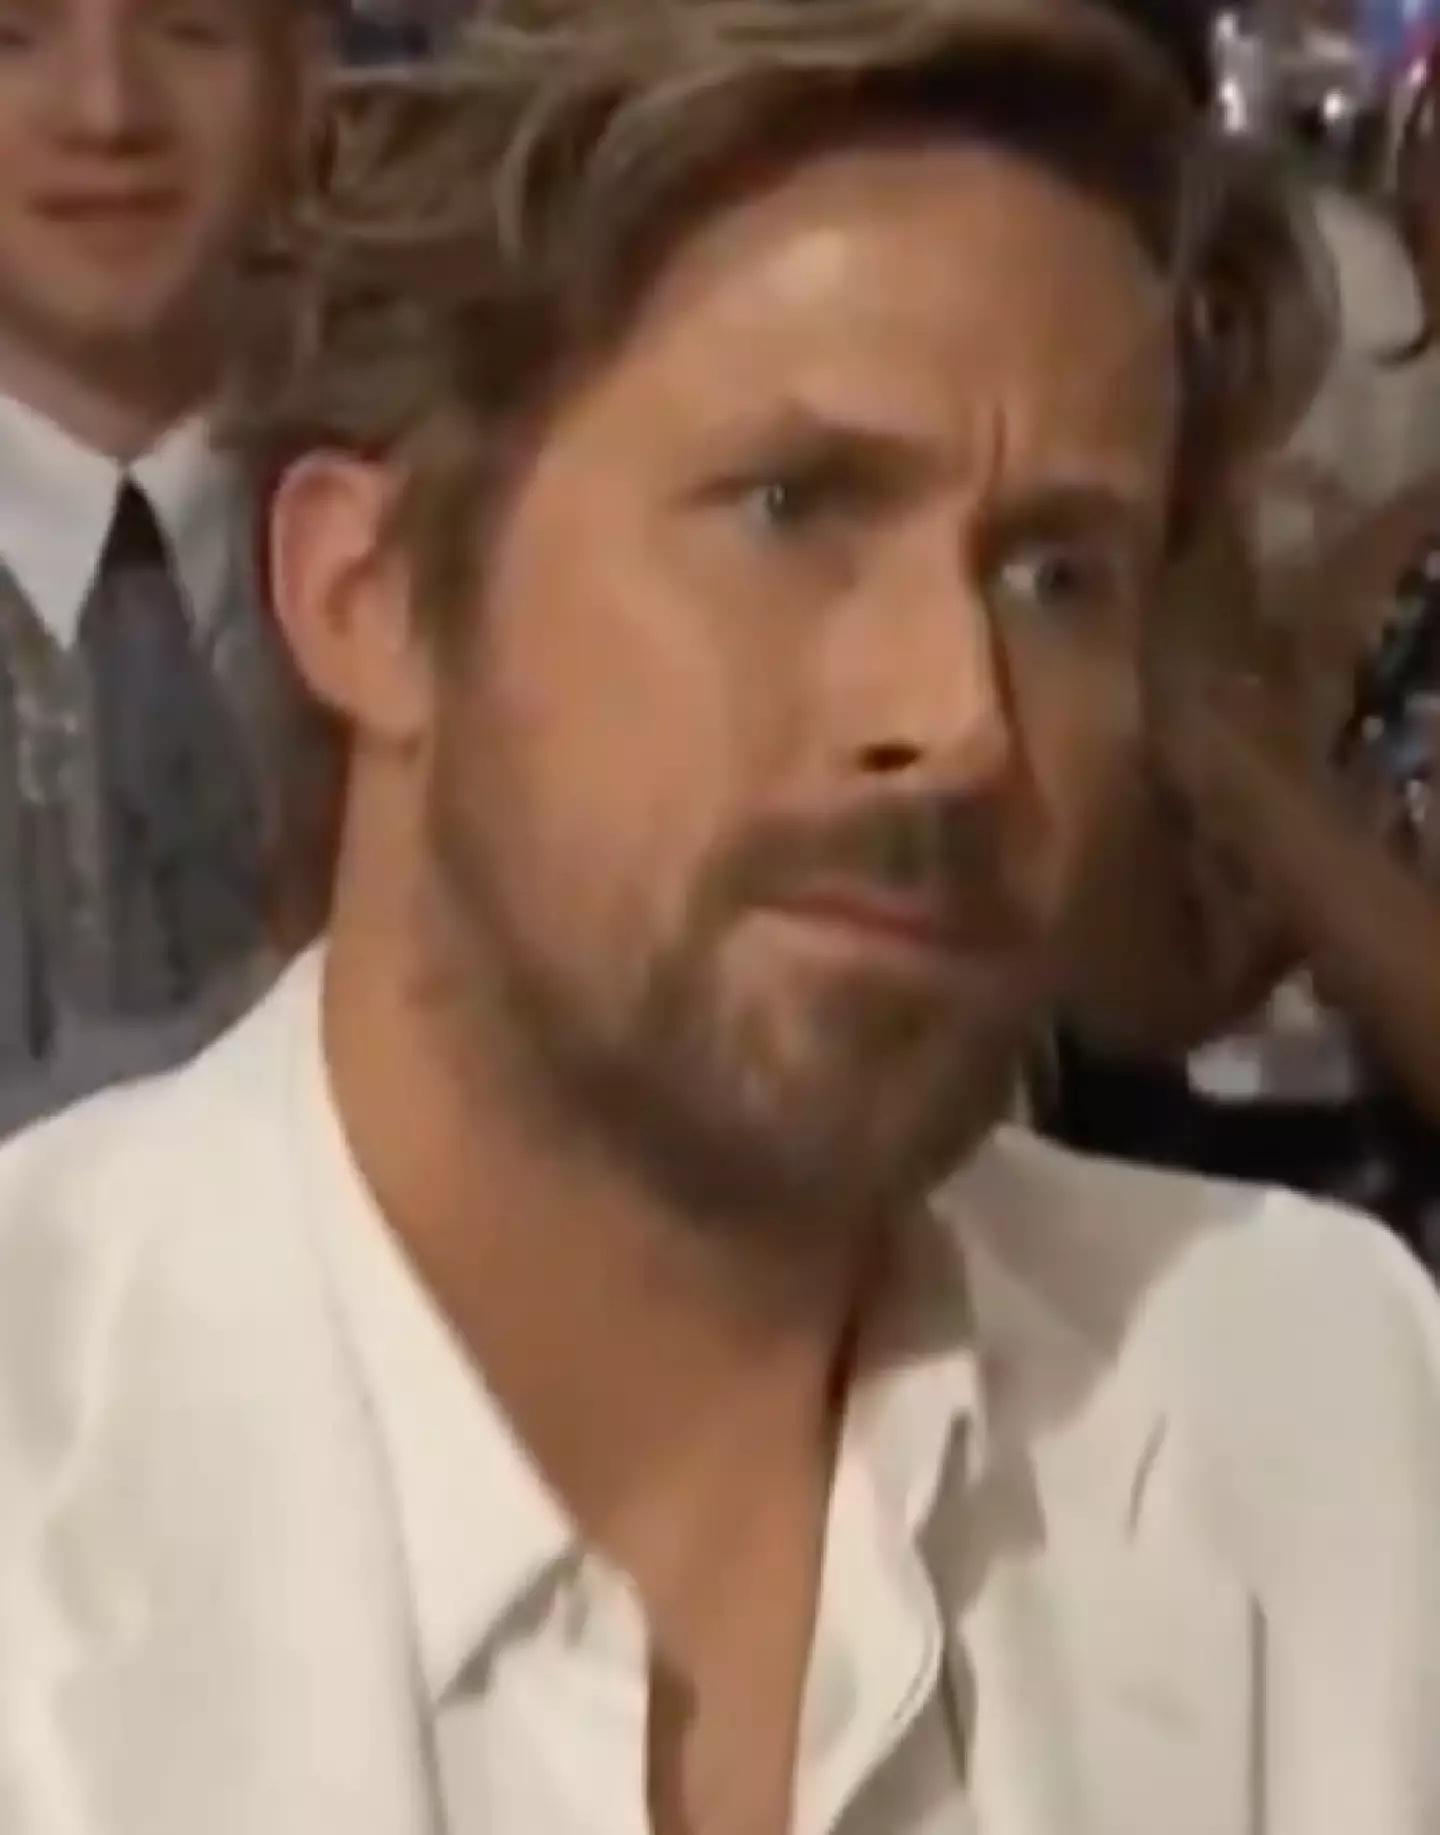 Ryan Gosling's reaction has become a meme.